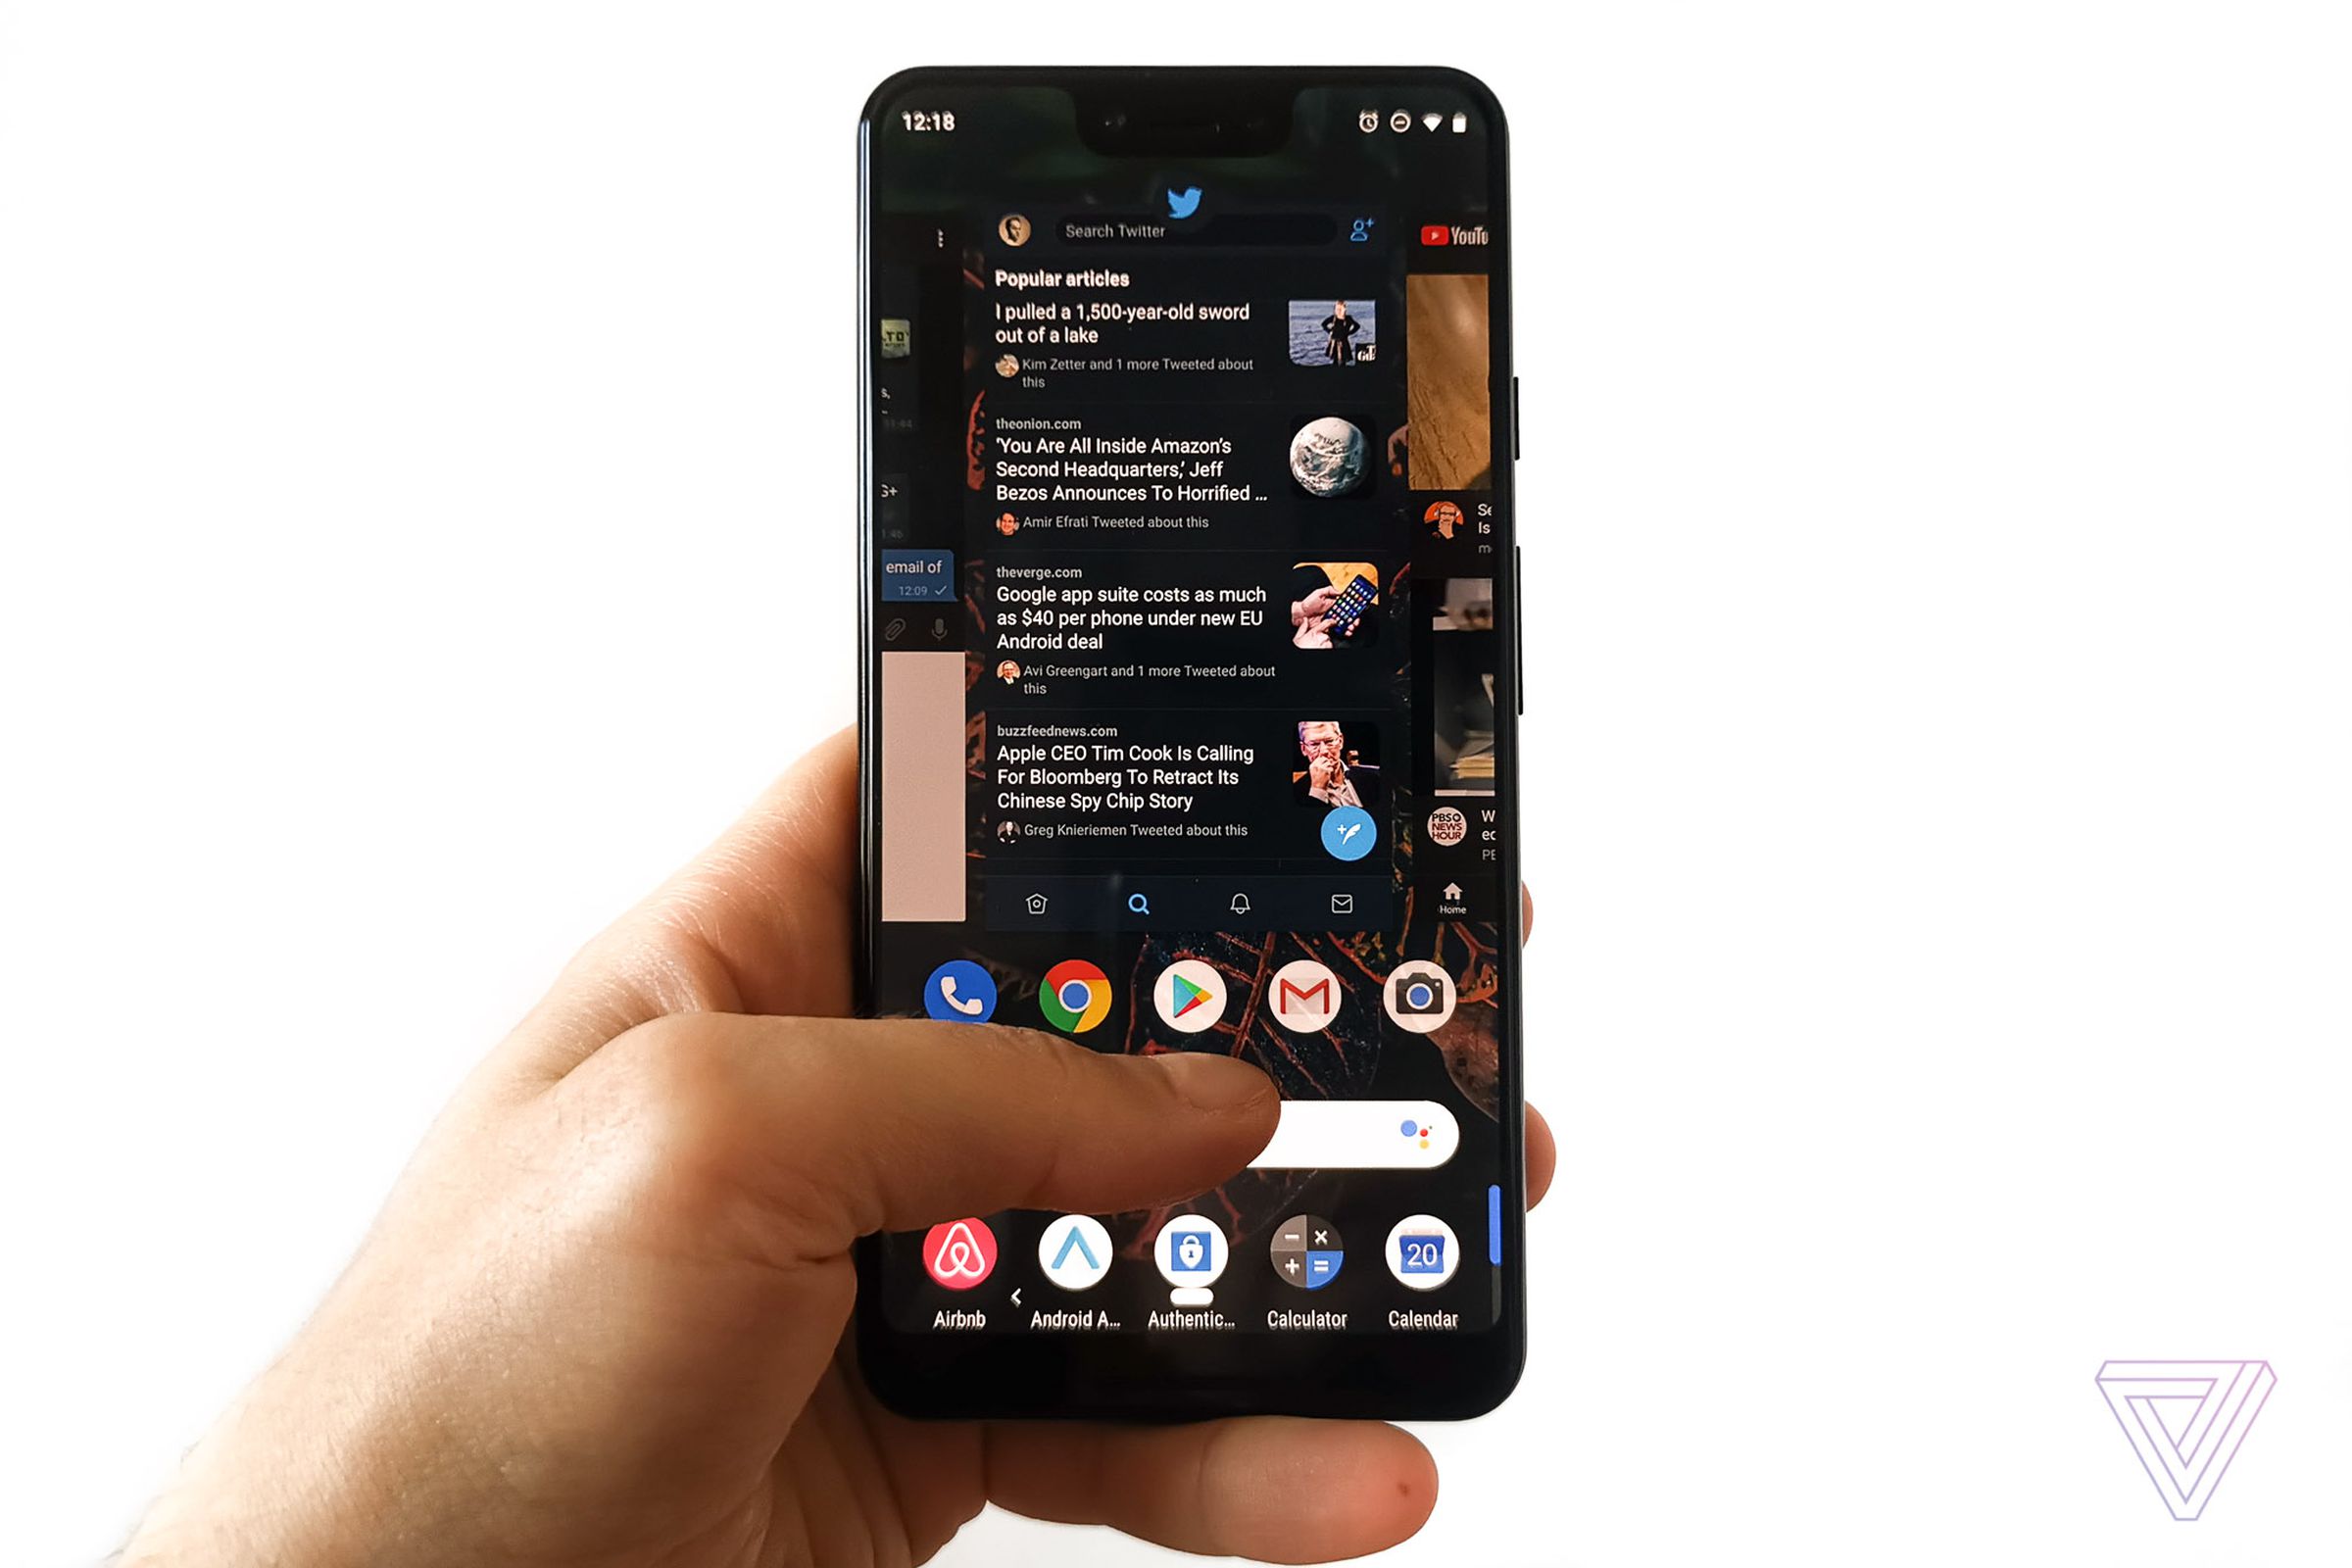 Android Pie’s multitasking menu on the Google Pixel 3 XL